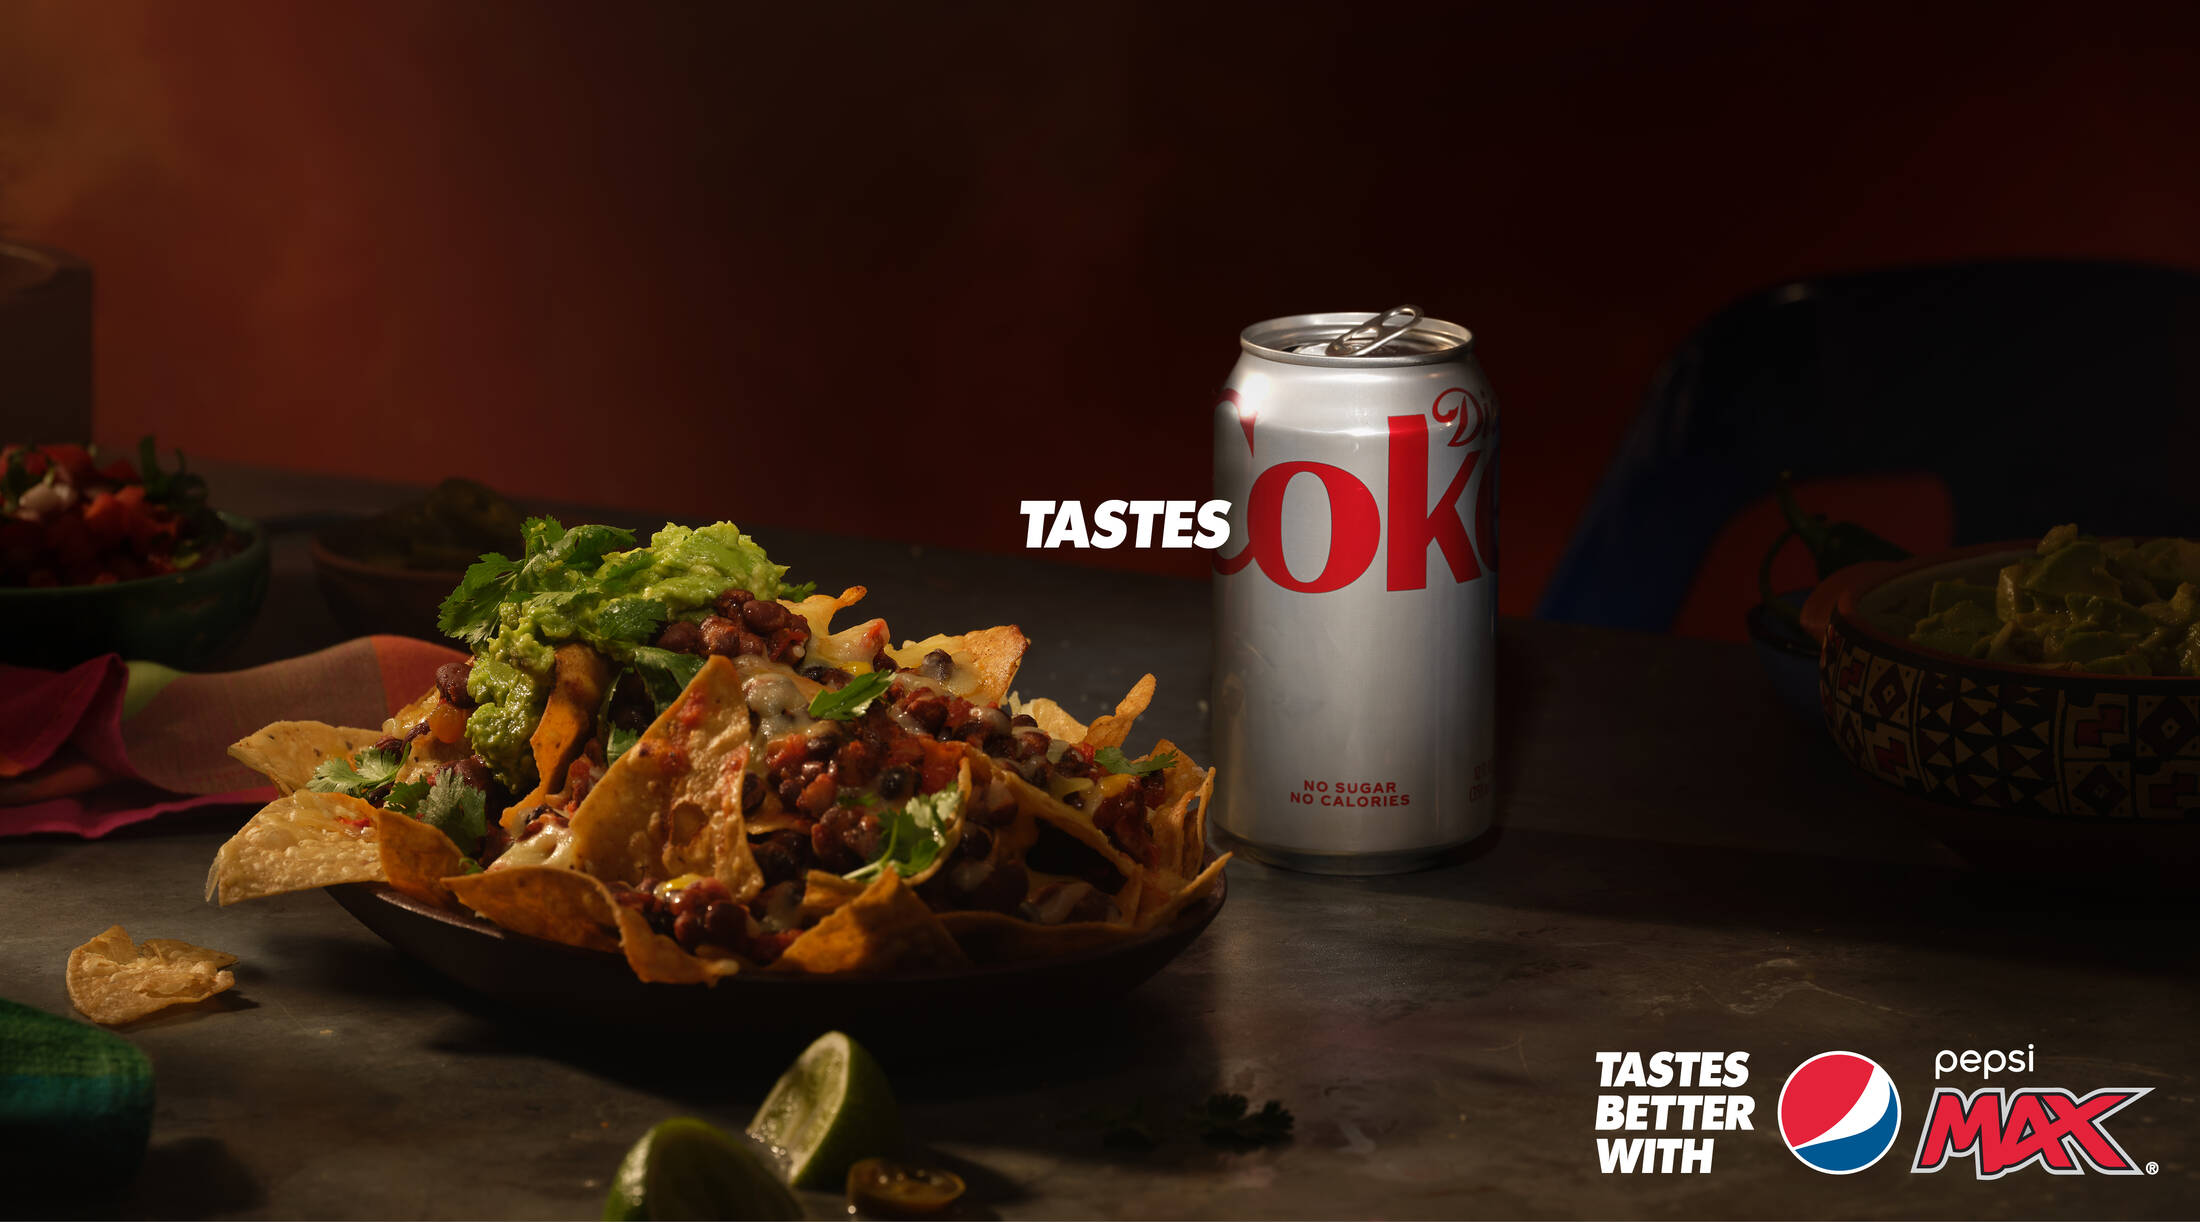 Tacos taste OK with Coke. Taste better with Pepsi Max